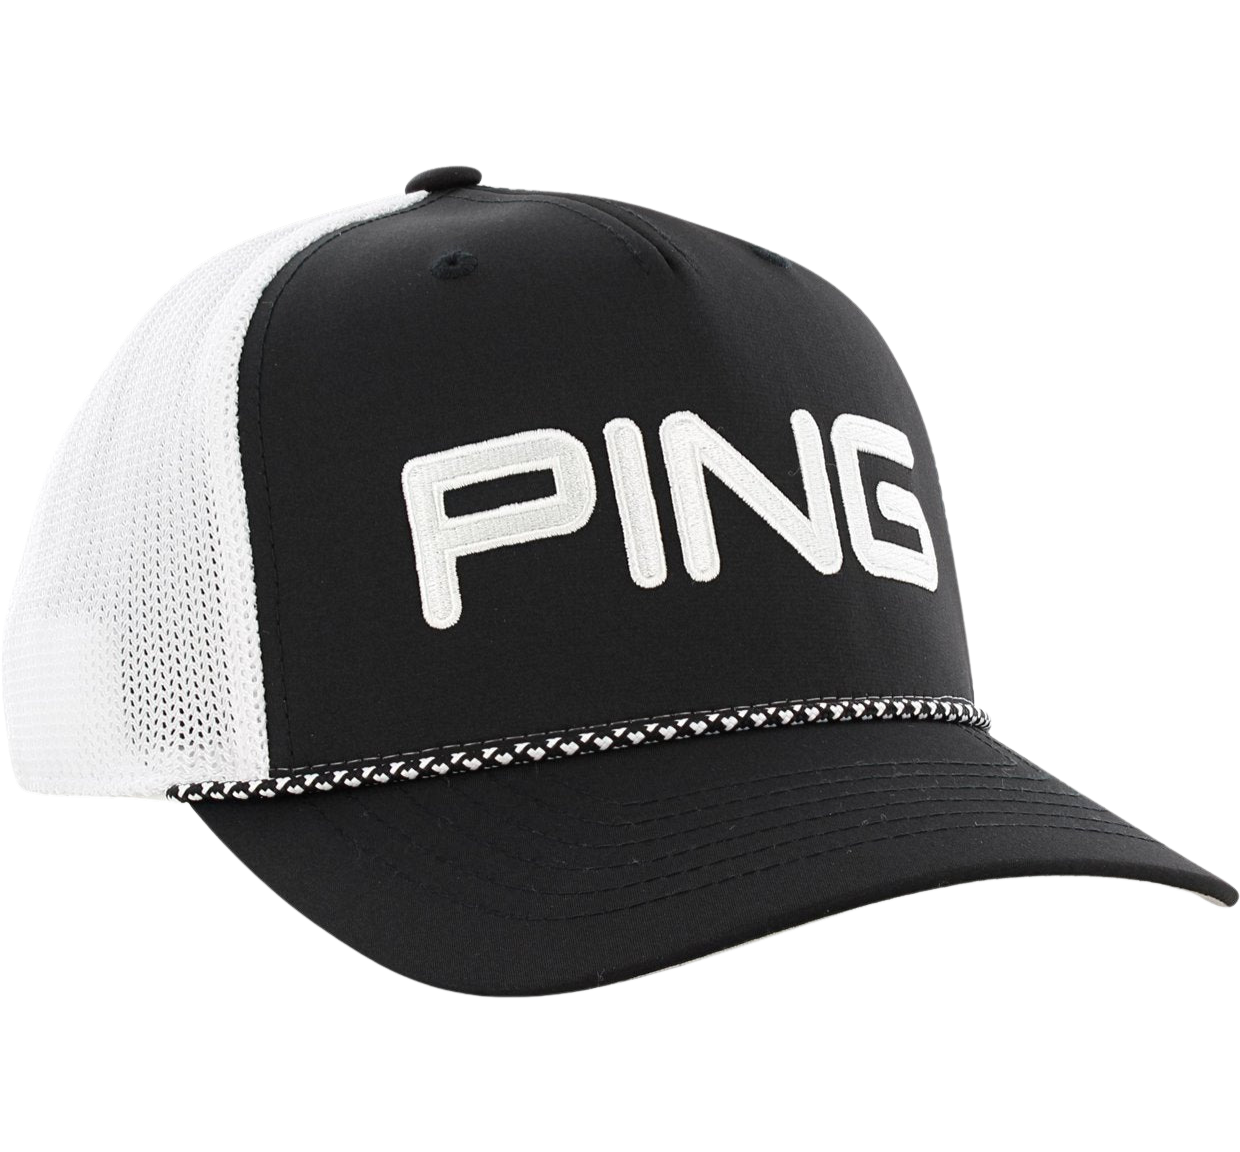 Ping Rope Mesh 201 Men's Hat